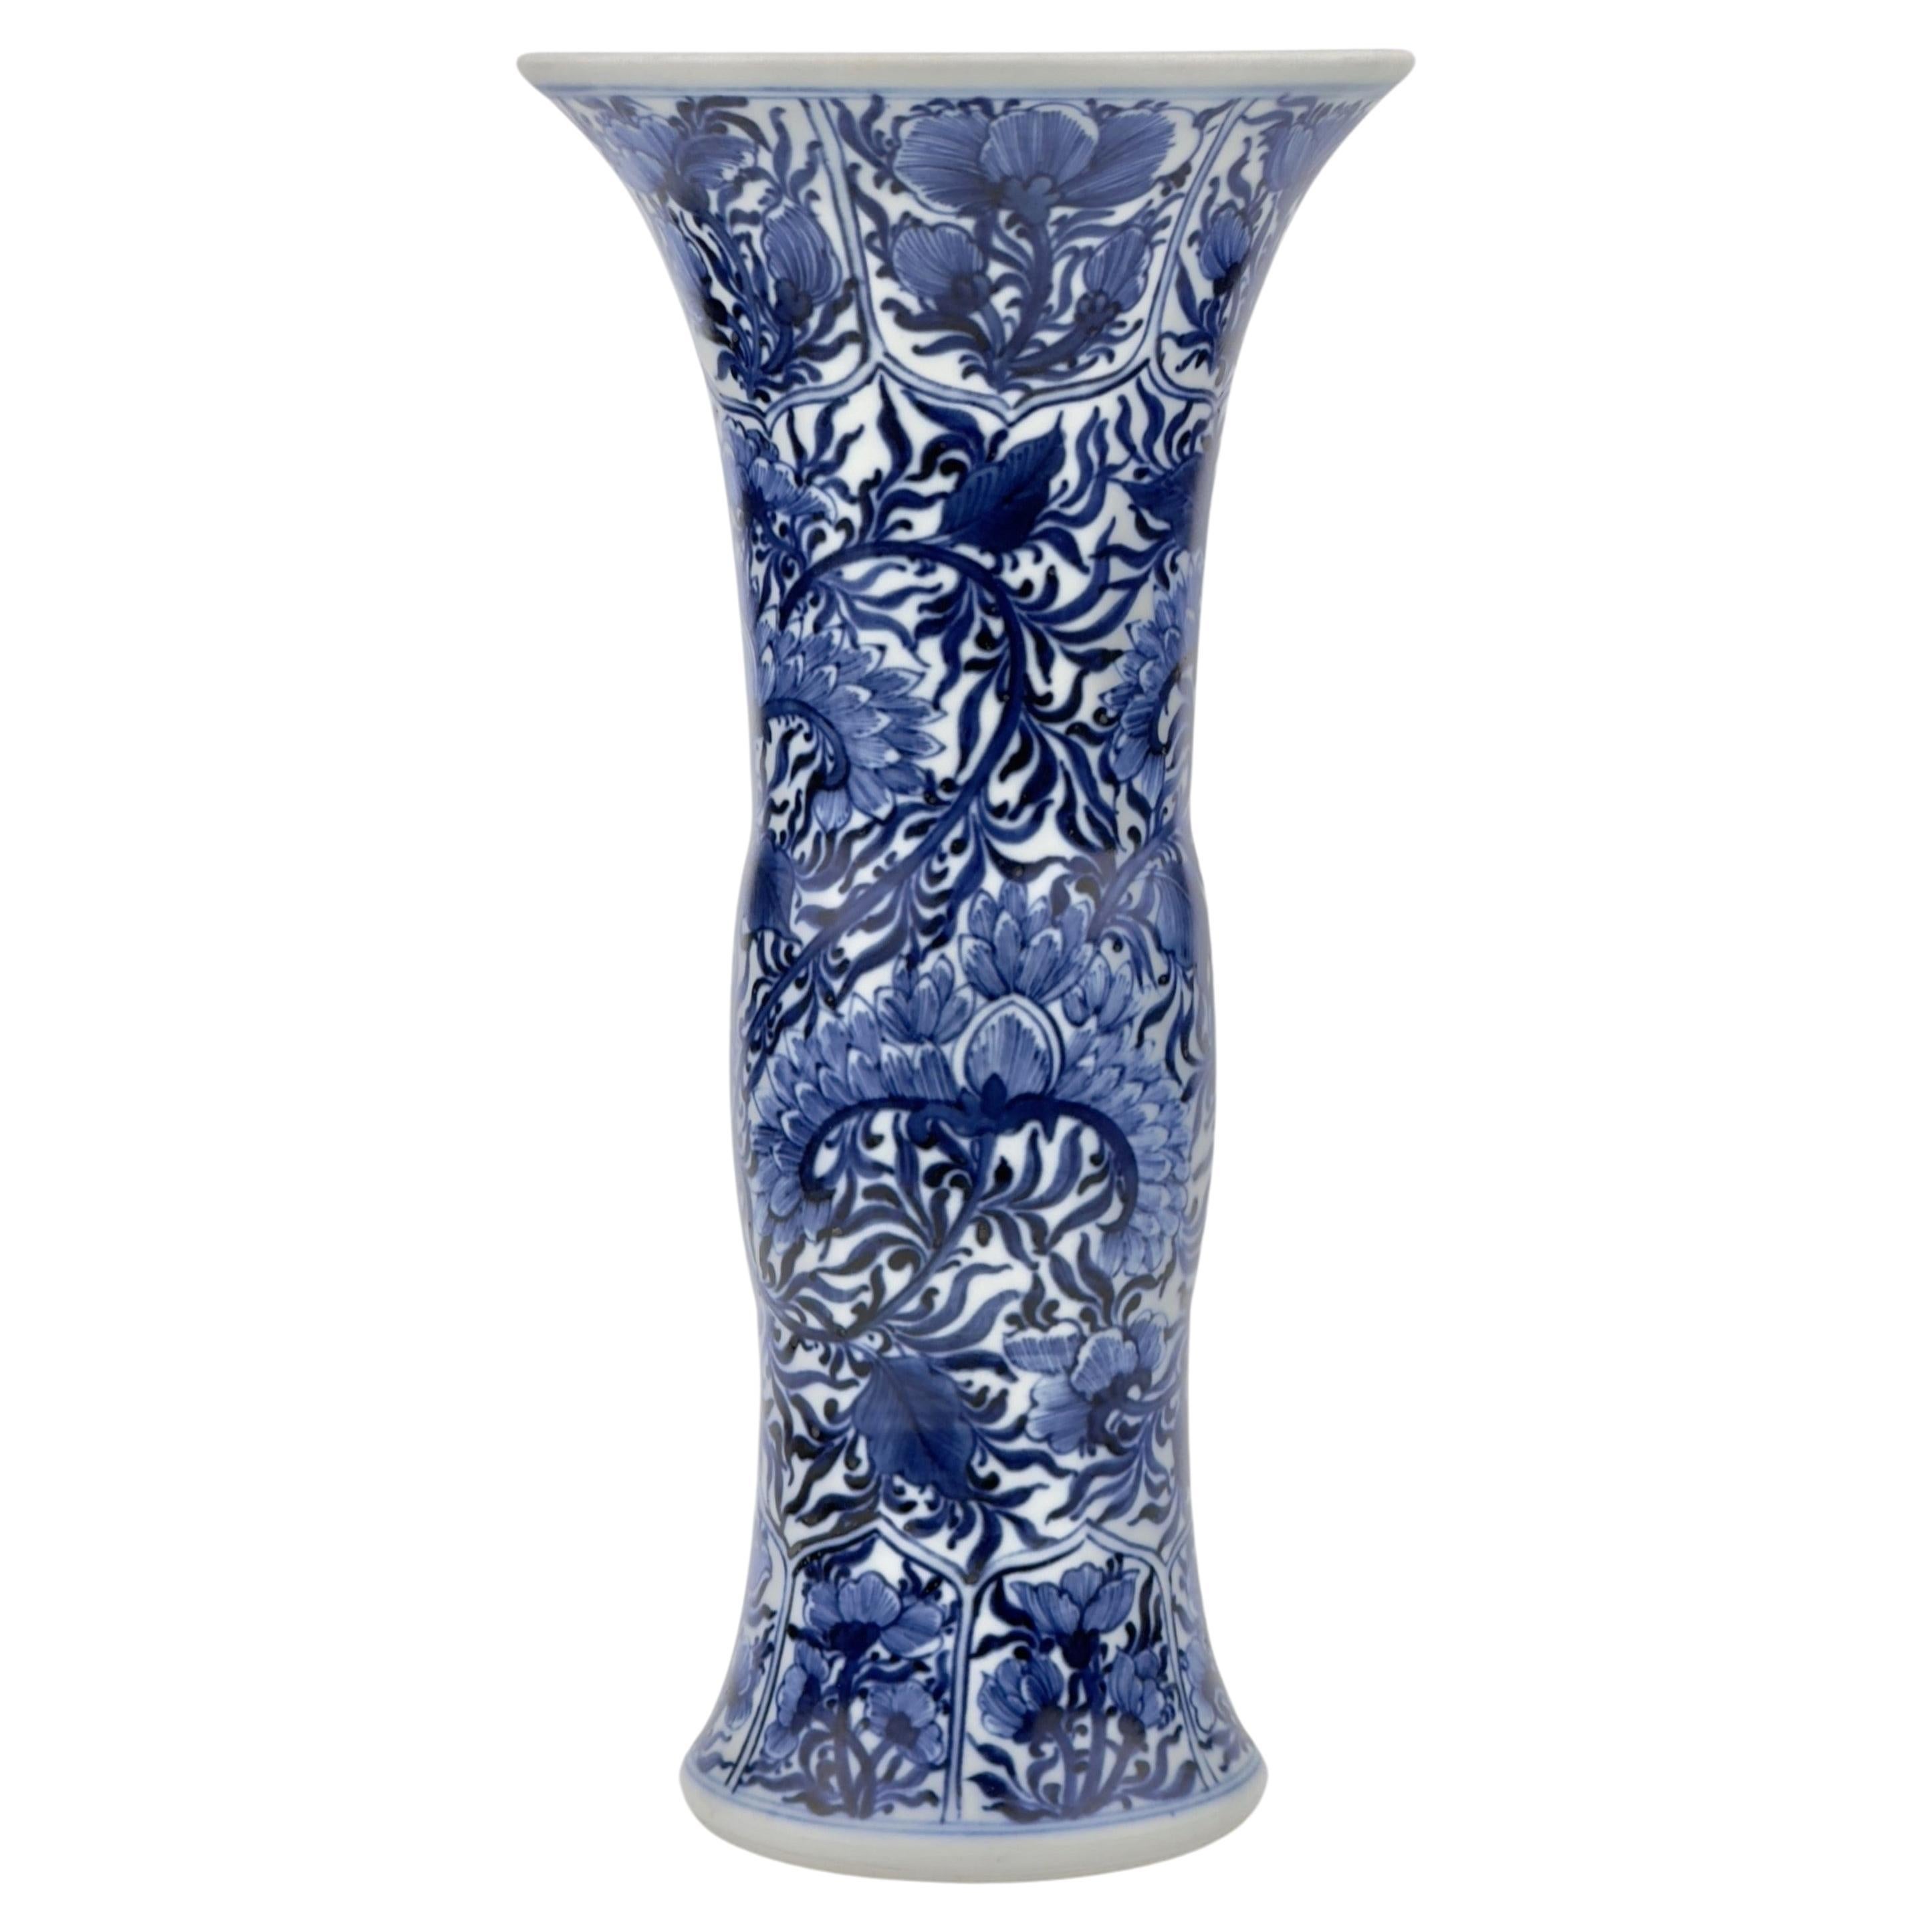 Antike blau-weiße Vase in Gu-Form, Qing Dynasty, Kangxi Ära, CIRCA 1690